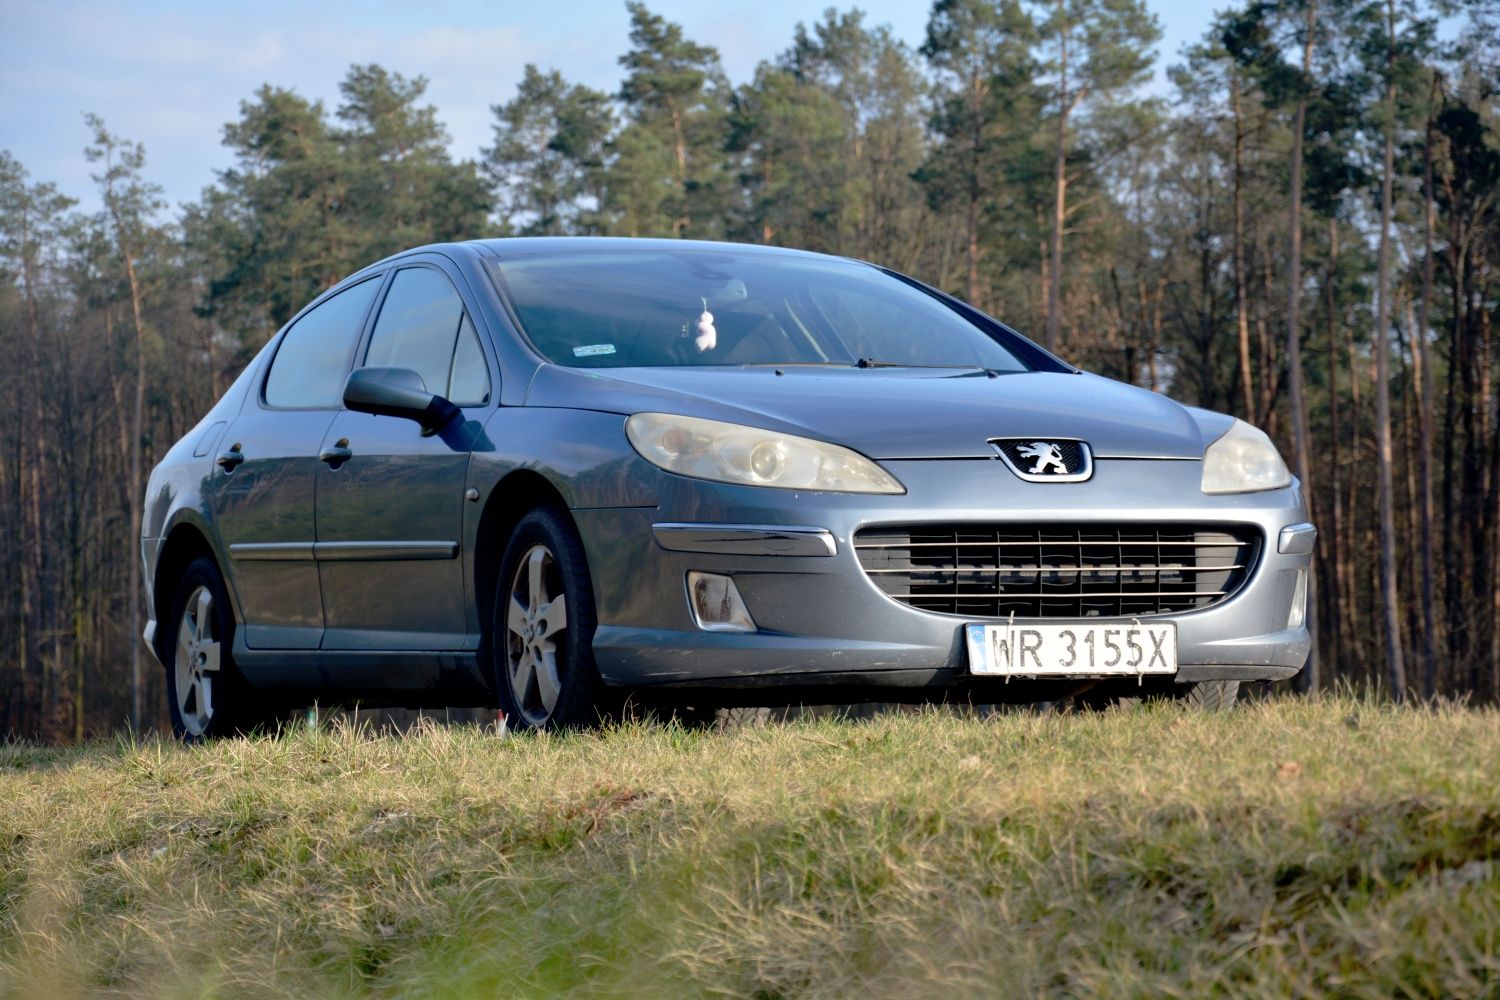 Sprzedam Peugeot 407, 2007r, 1.6 HDI